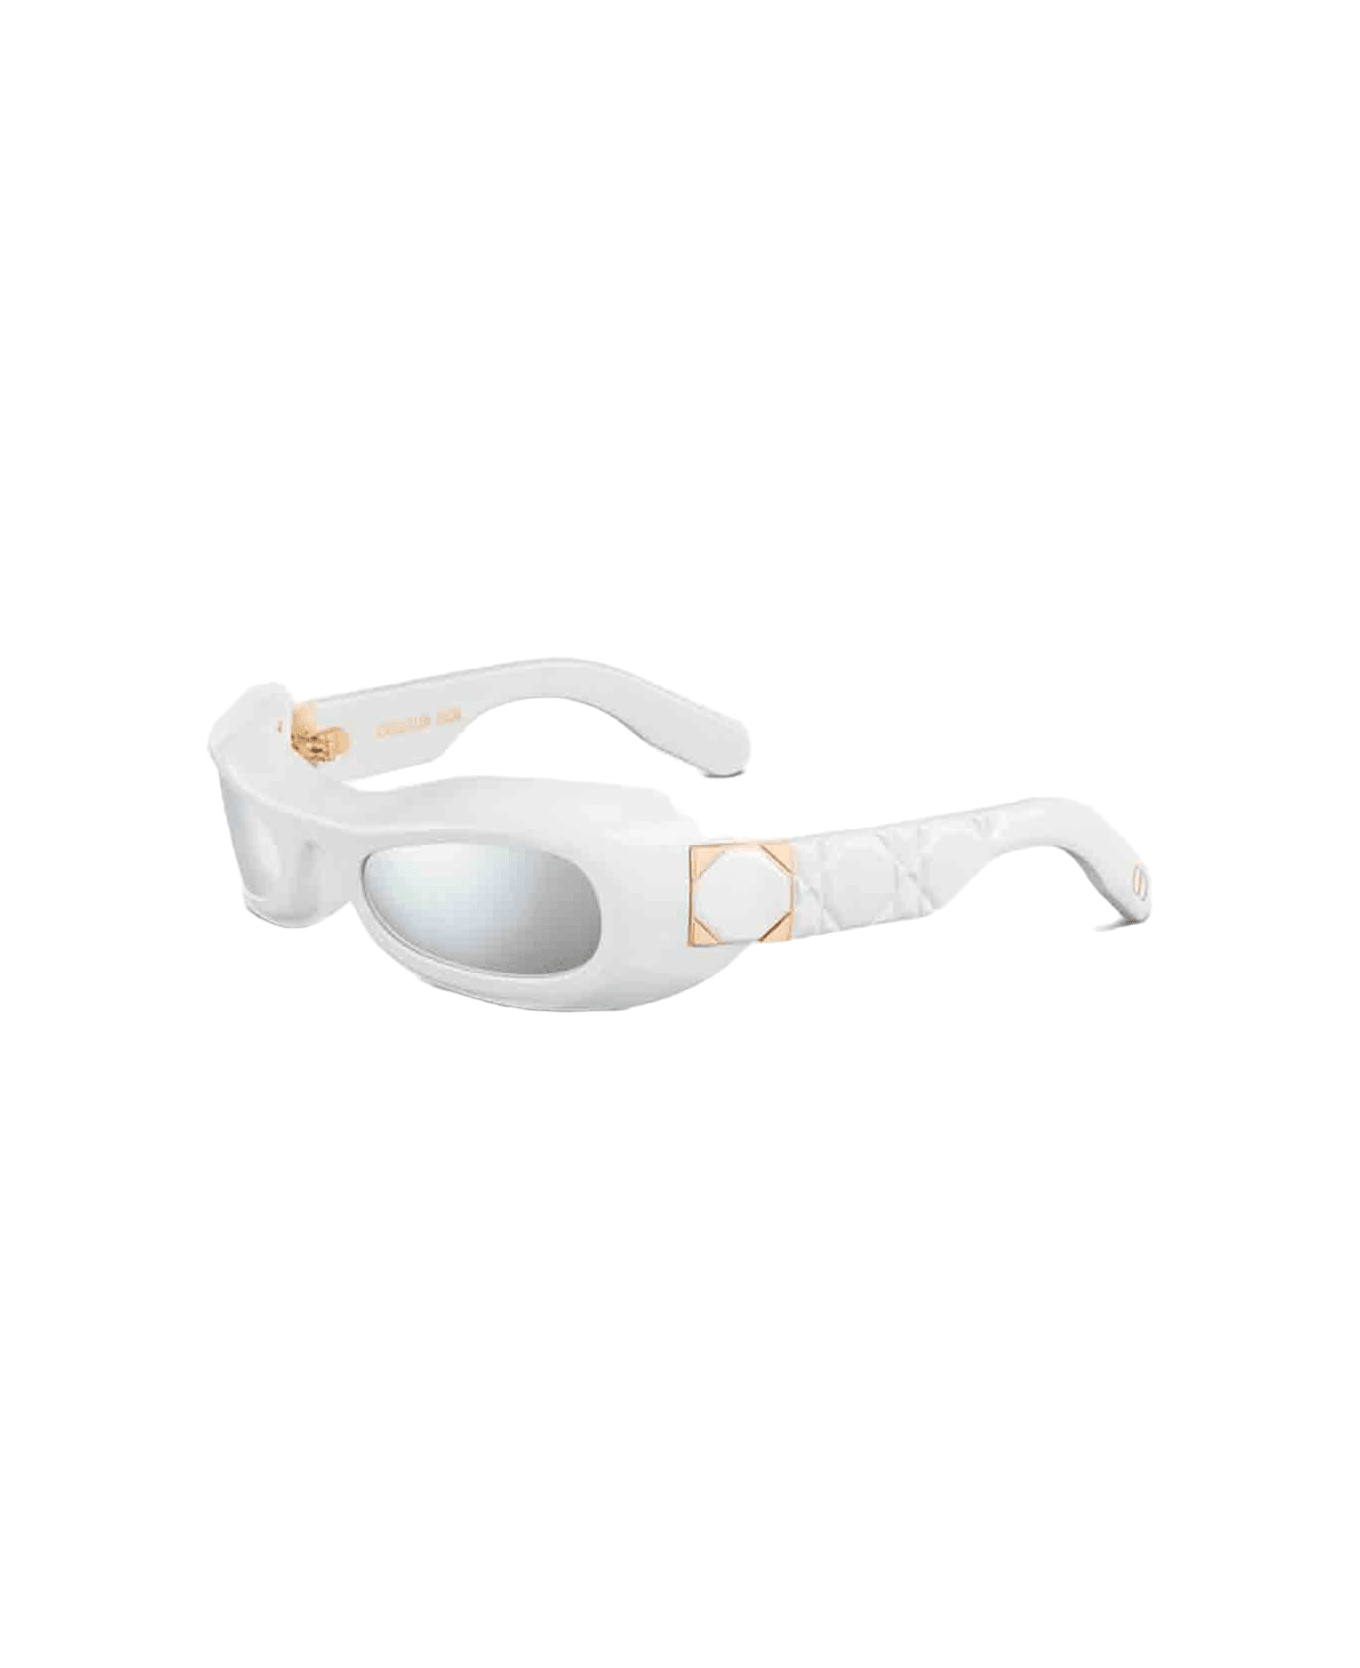 Dior Eyewear Sunglasses - Bianco/Silver サングラス